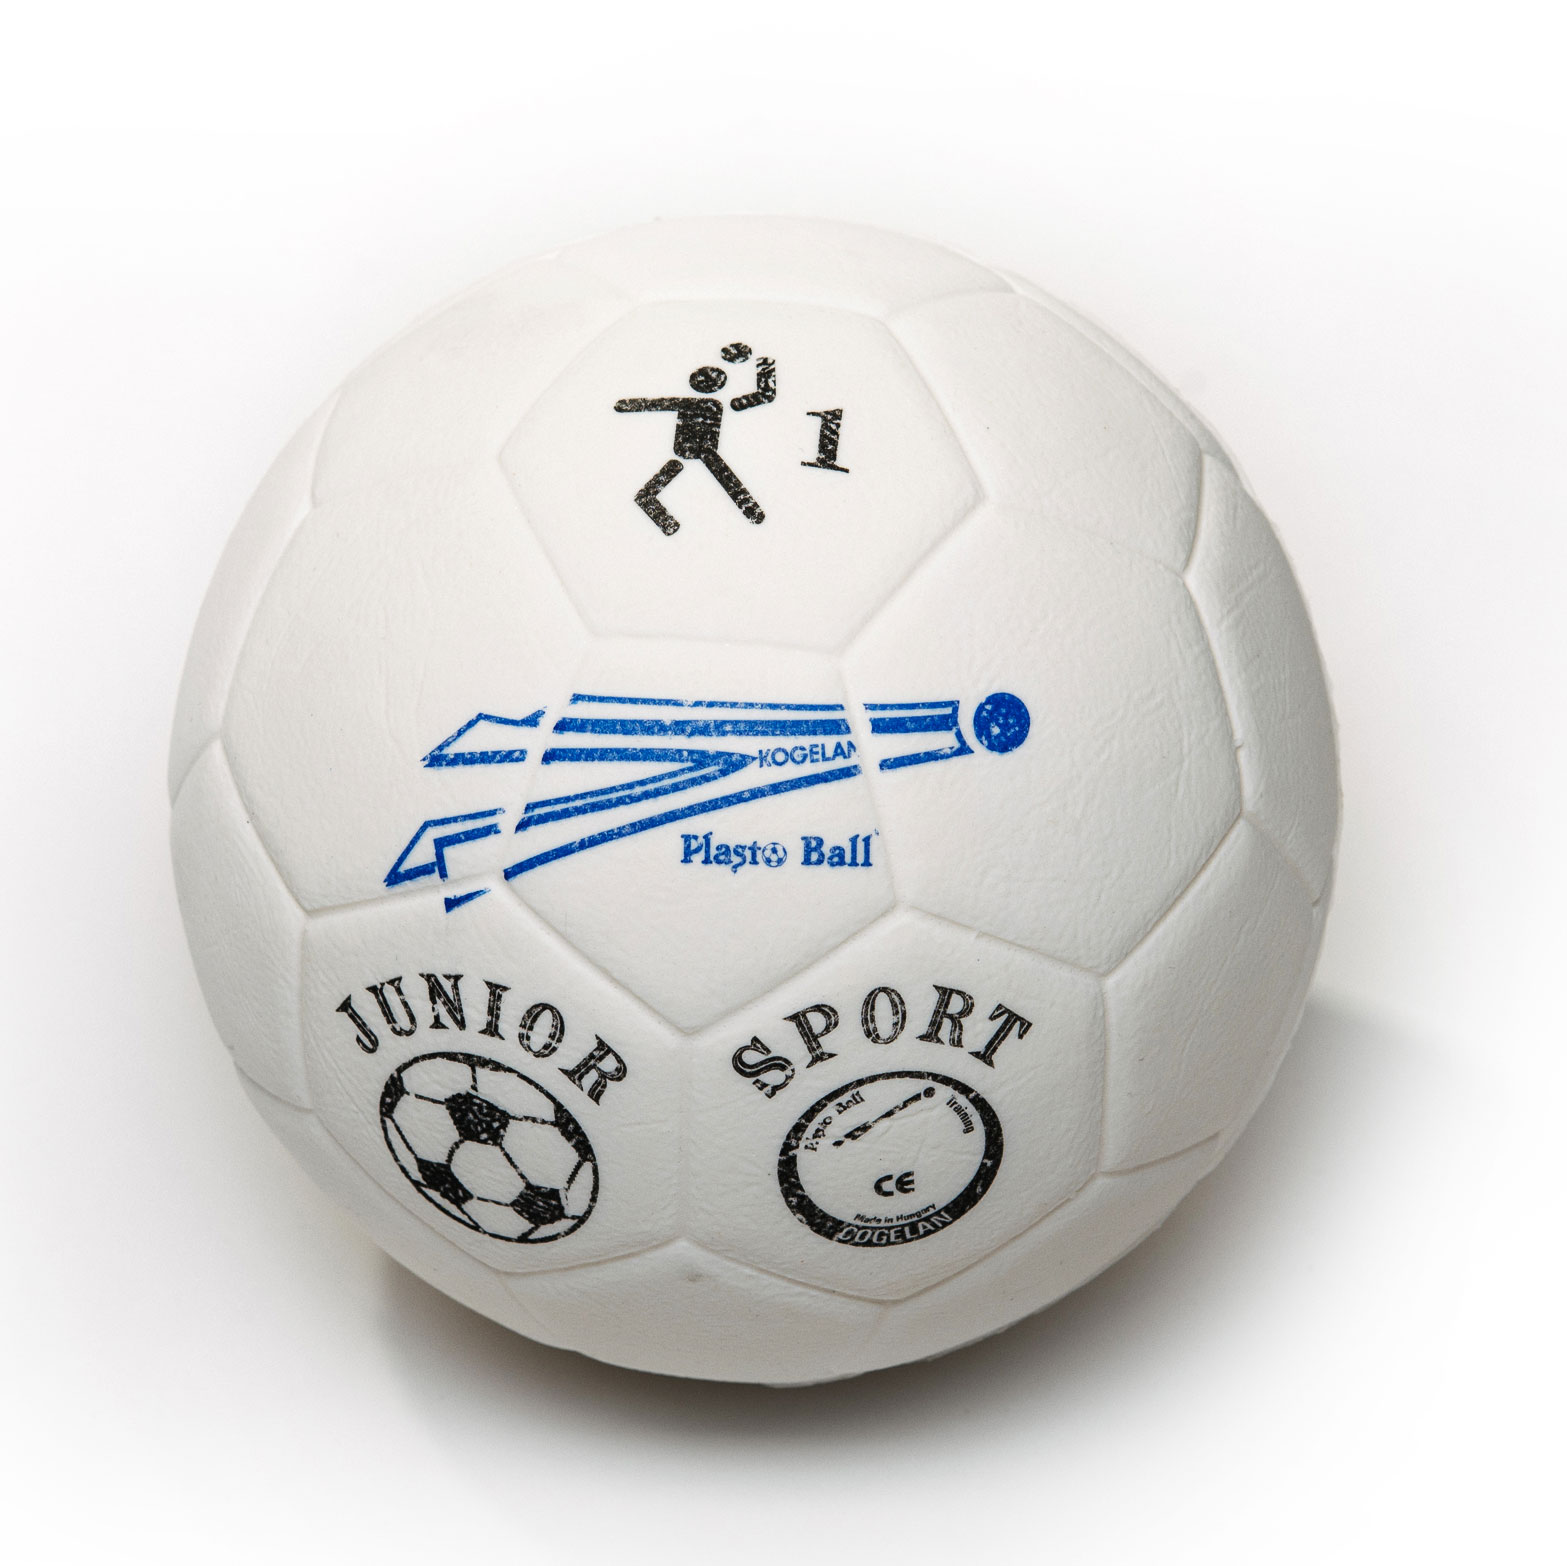 Handball size 1 – Plasto Ball